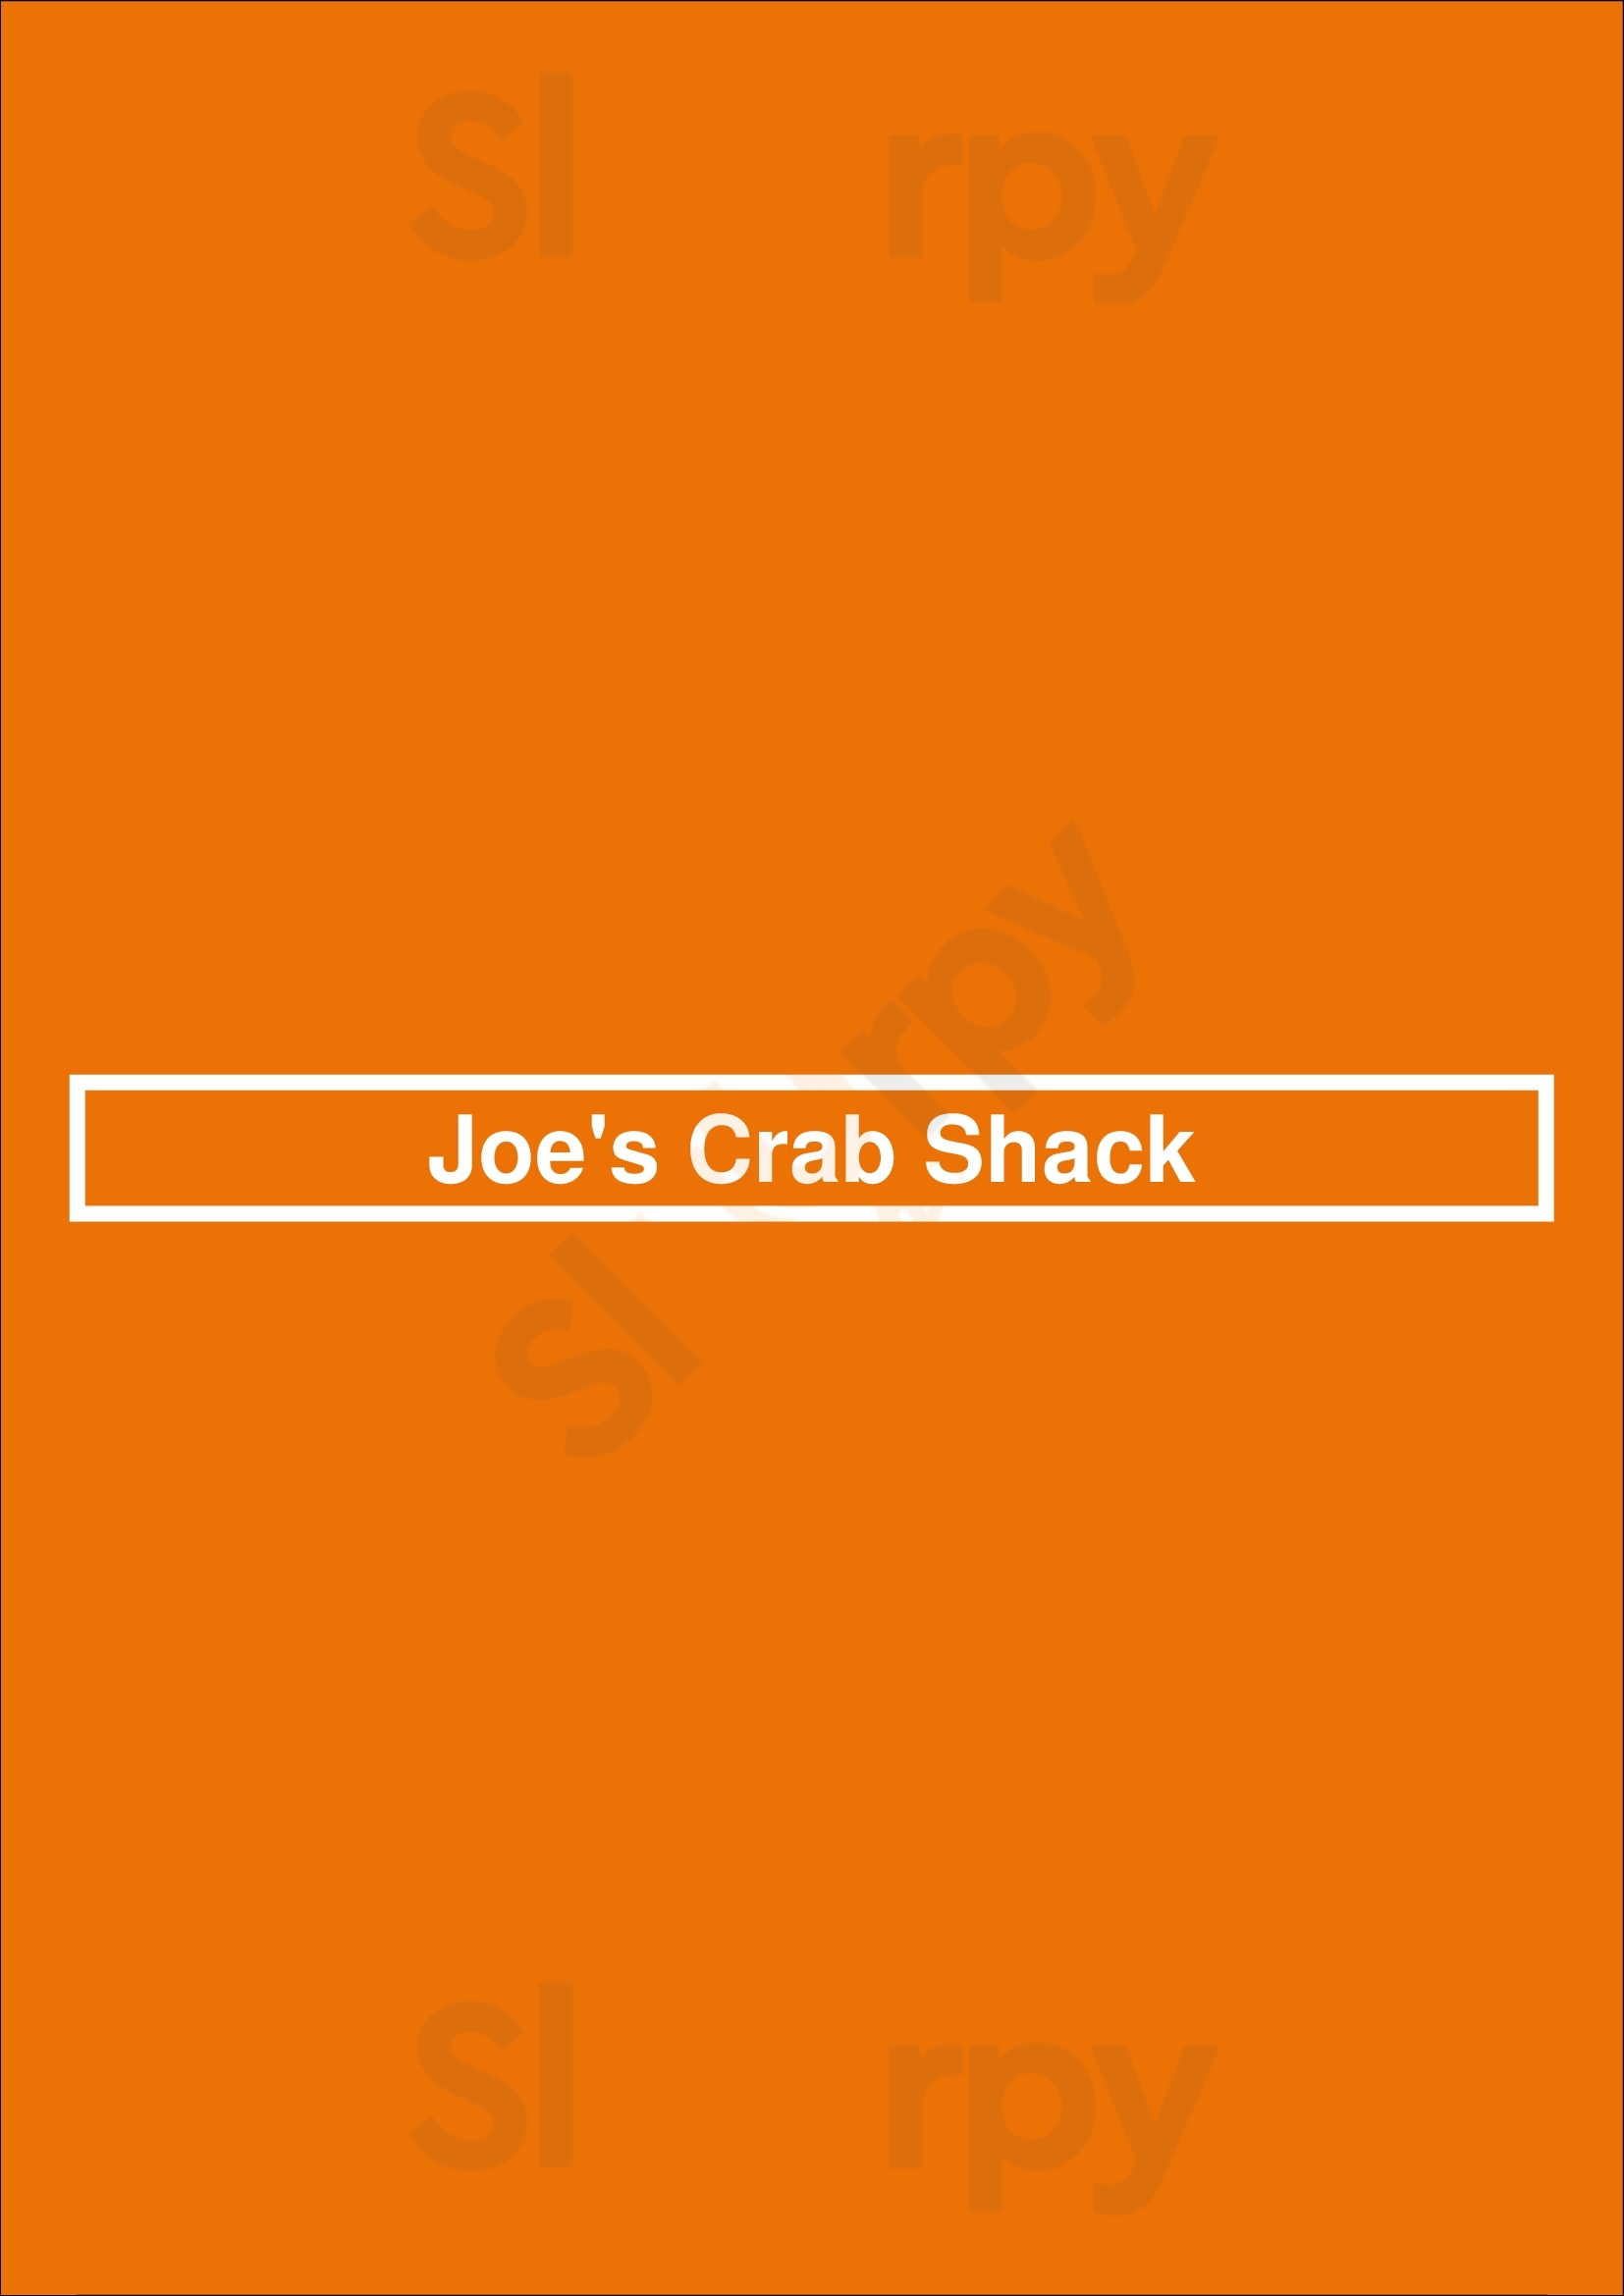 Joe's Crab Shack Galveston Menu - 1